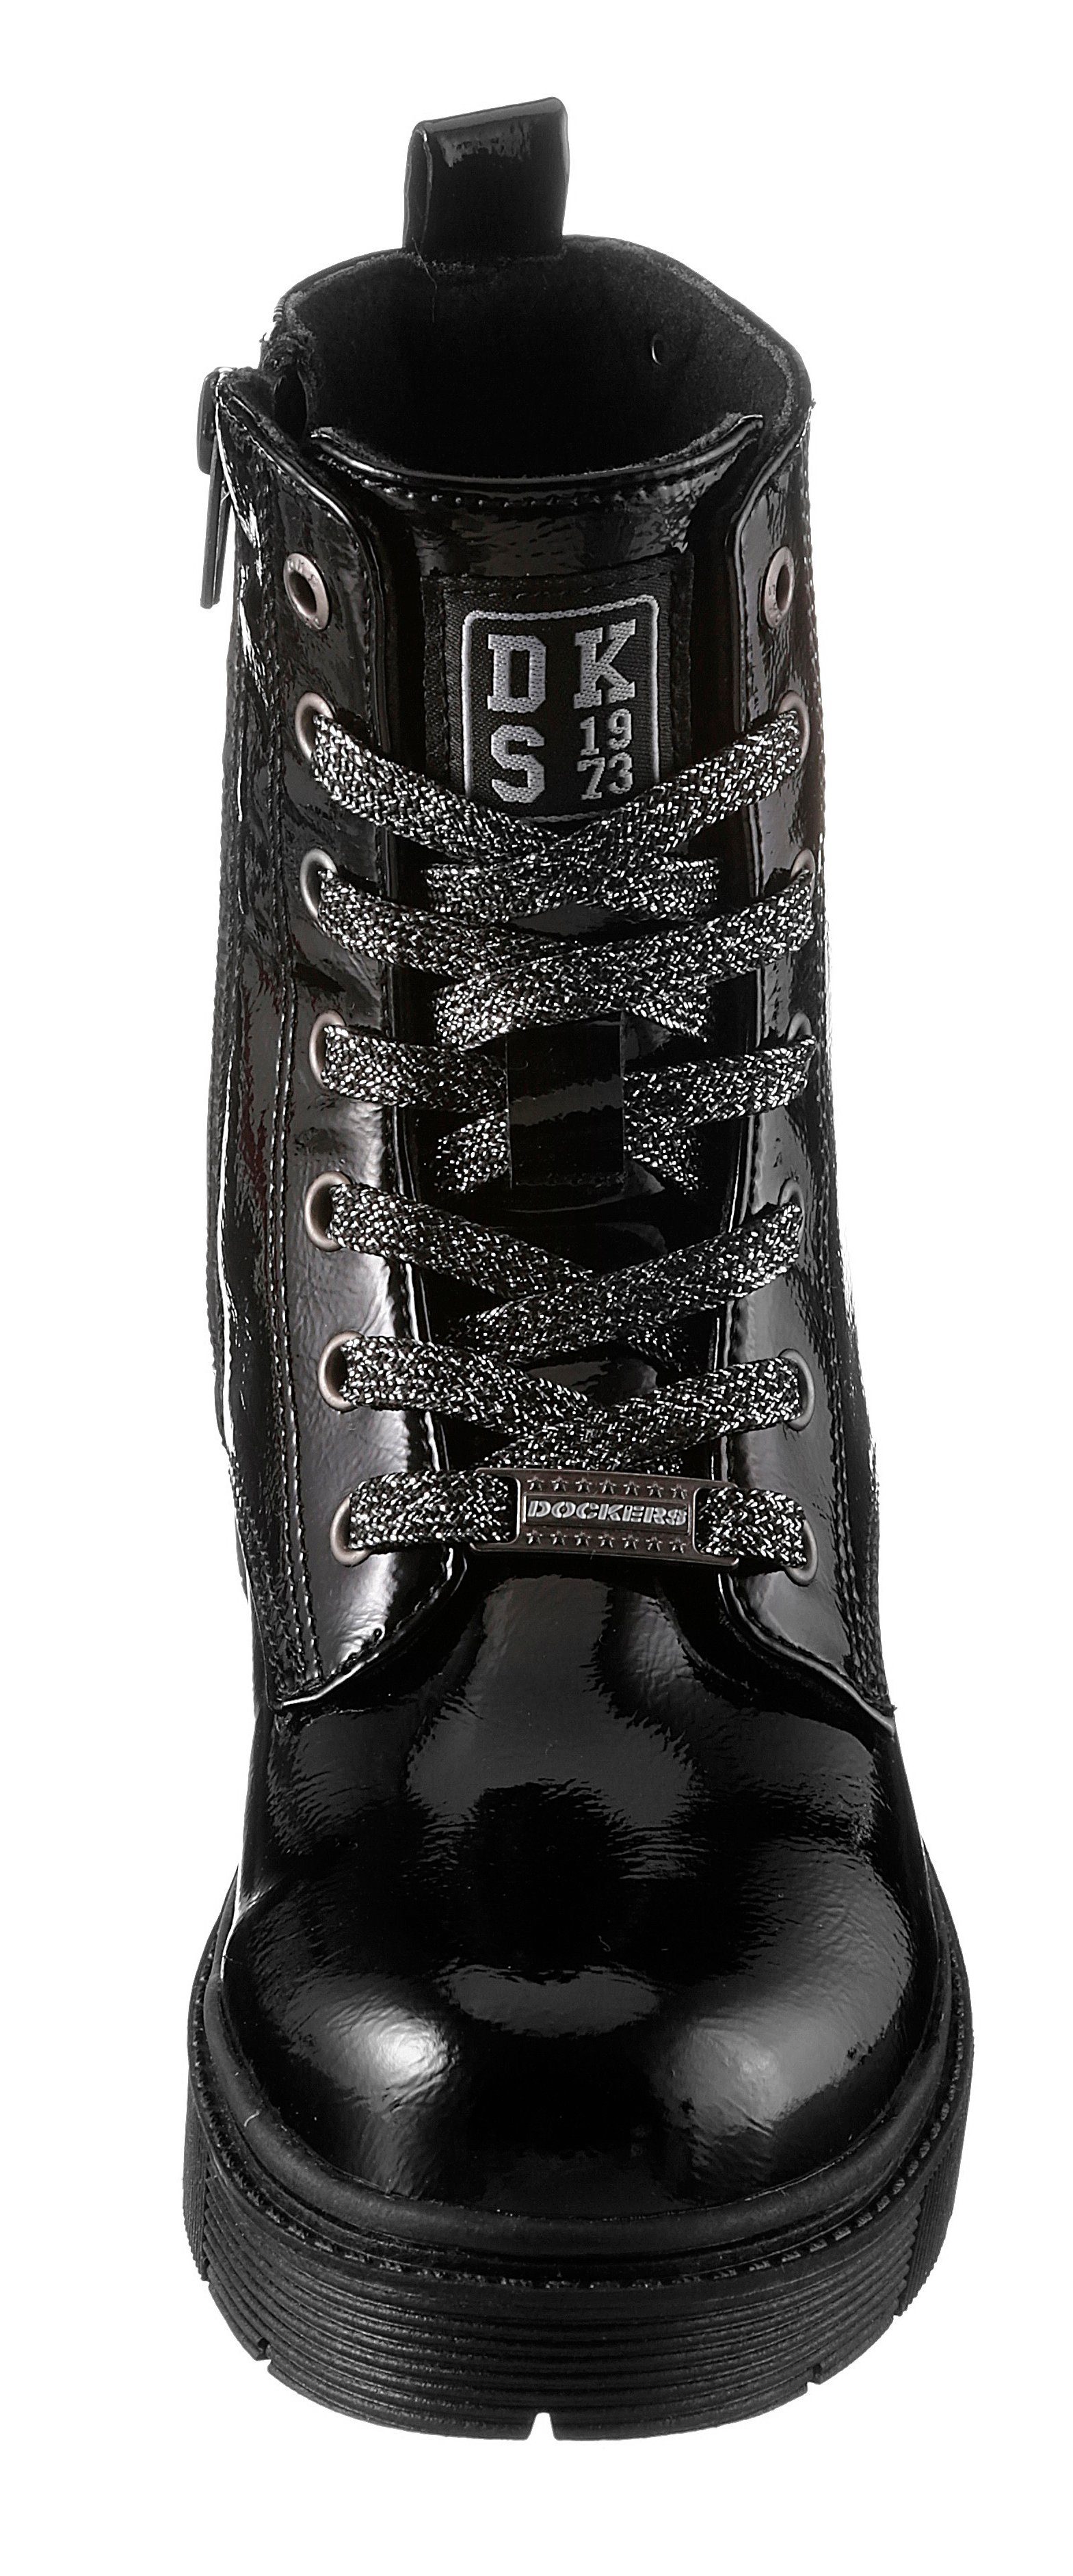 Dockers by Gerli Stiefel in Lack-Optik schwarz glänzender